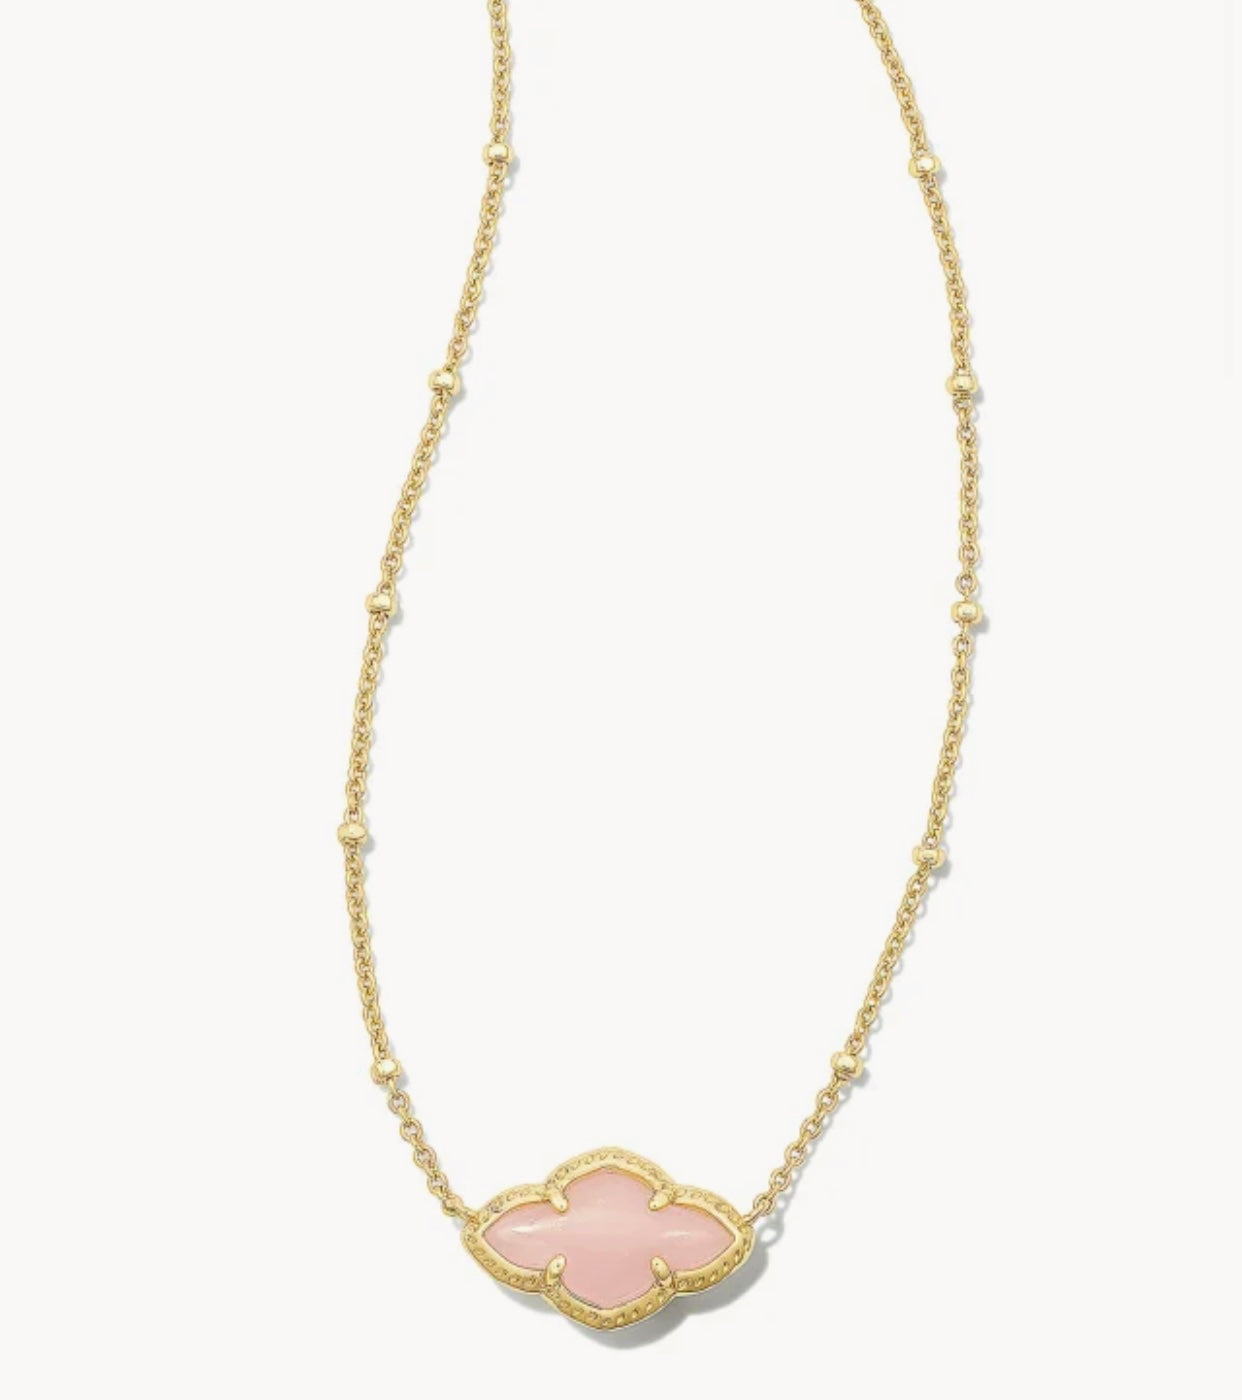 Abbie Rose Quartz Pendant Gold Necklace